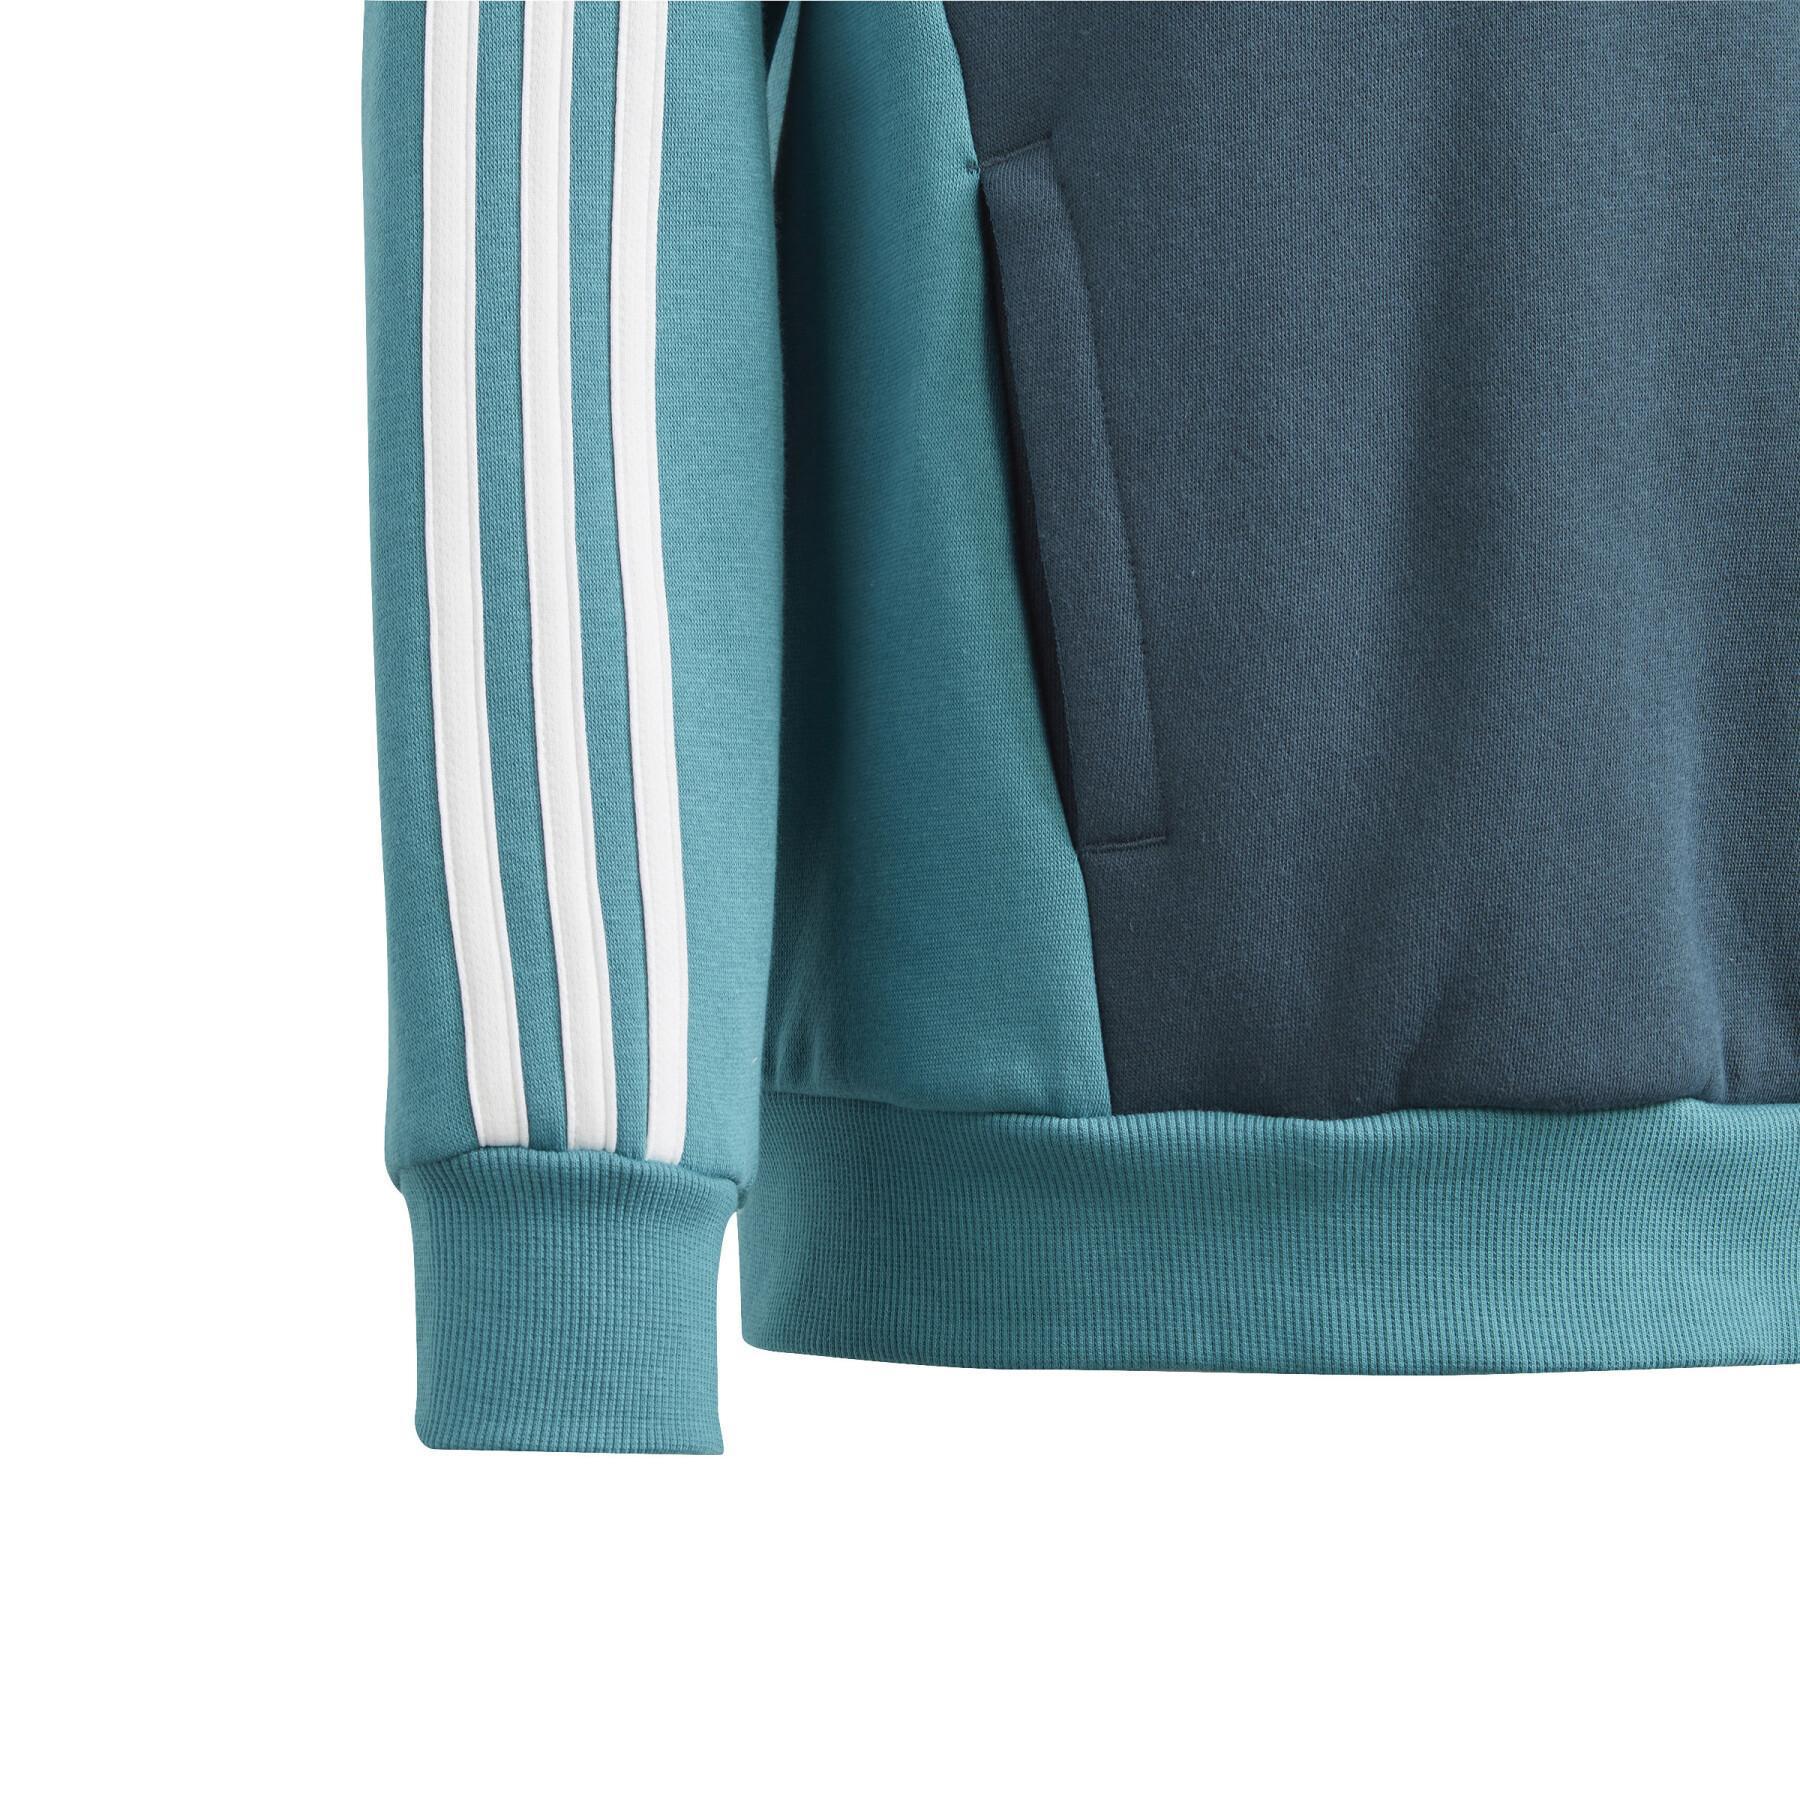 Children's hoodie adidas Tiberio 3-Stripes Colorblock - adidas - Brands -  Lifestyle